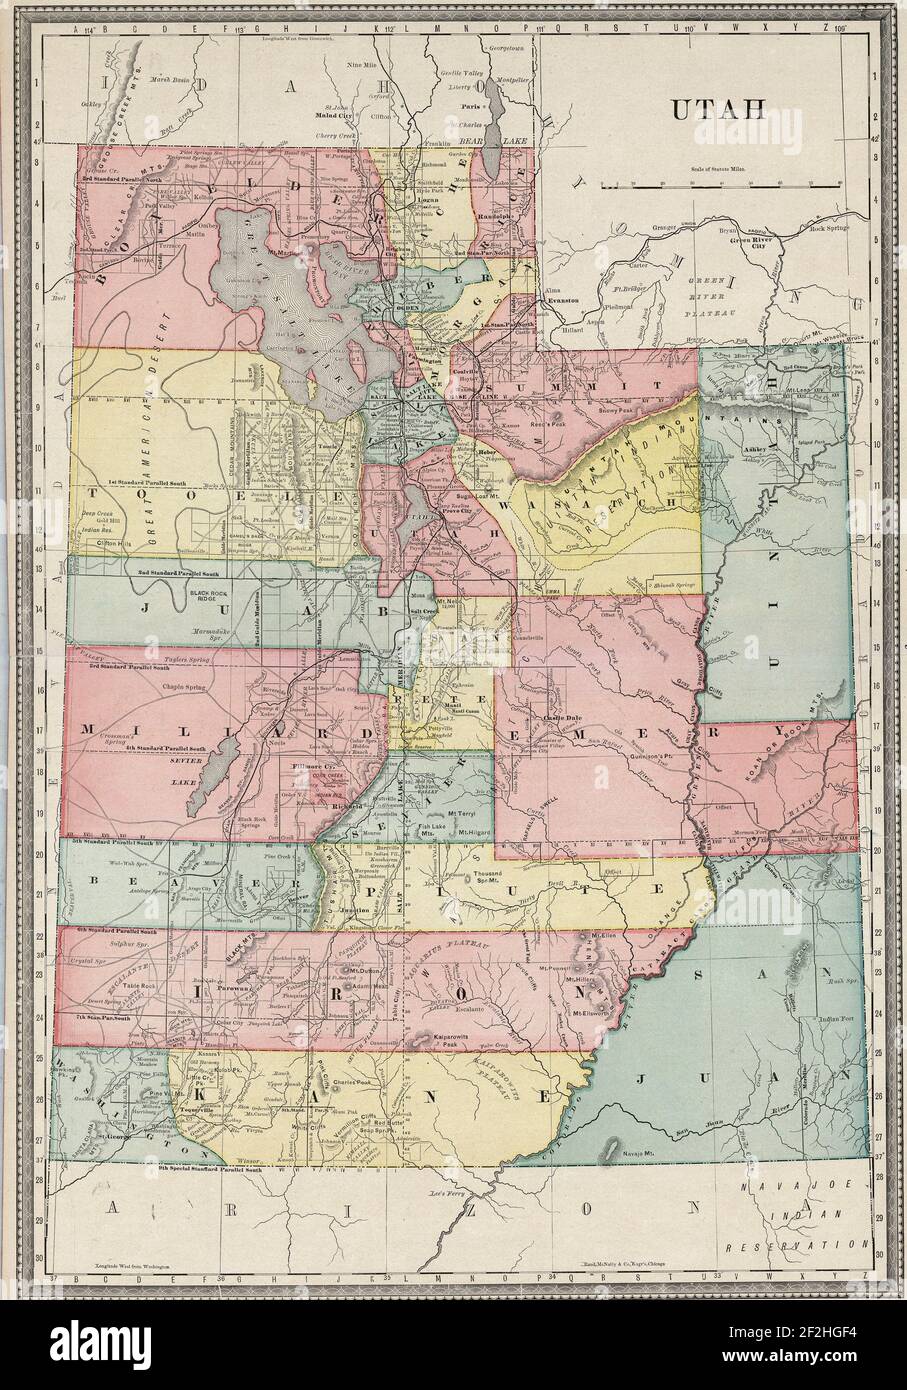 Map of Utah by Rand McNally and Company, 1860 Stock Photo